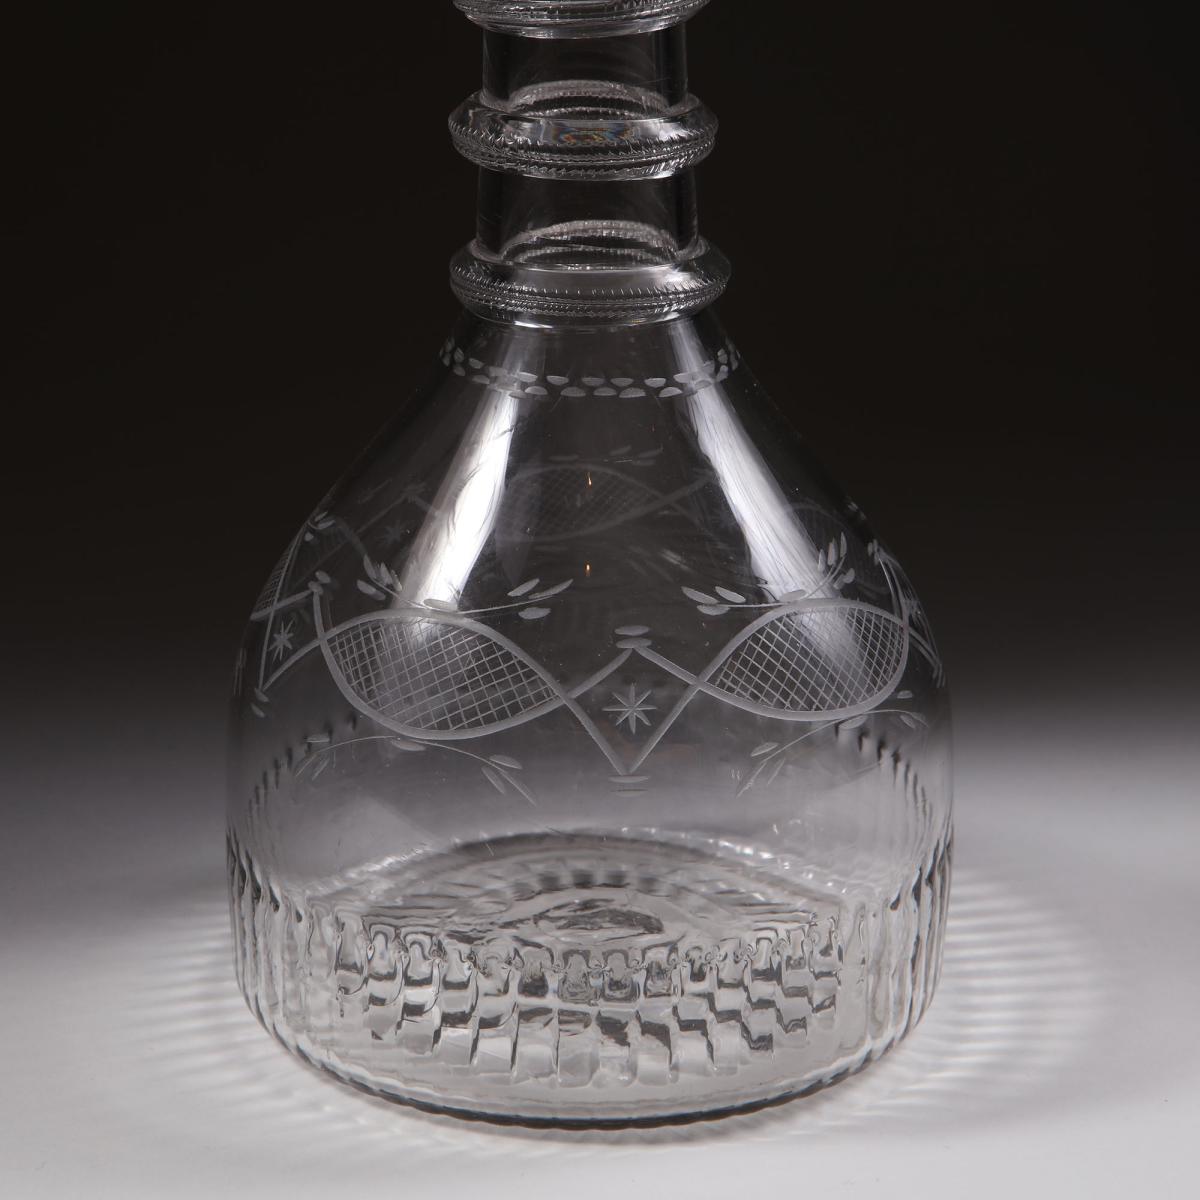 An early 19th century Irish glass decanter